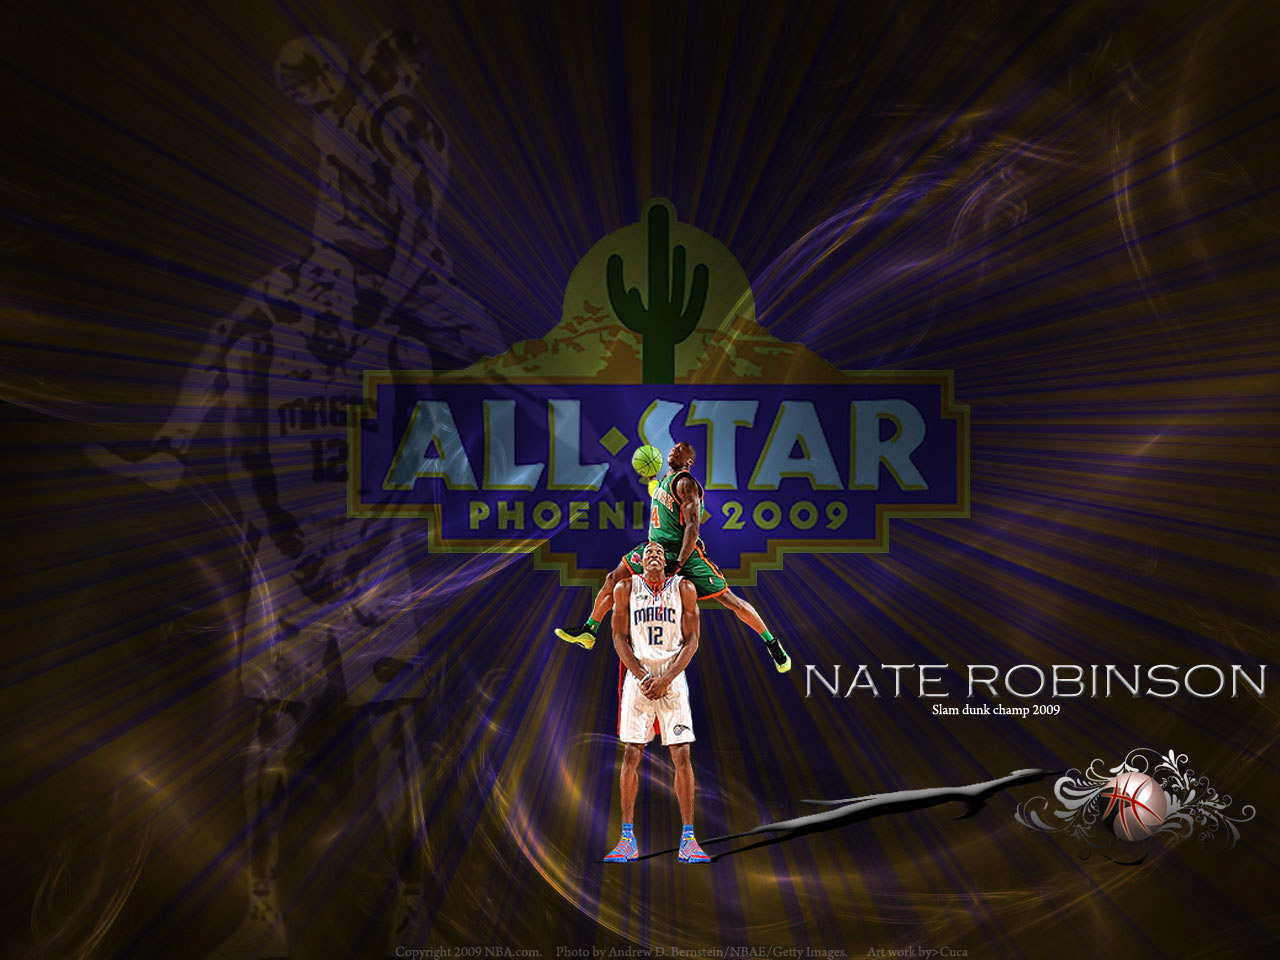 Nate Robinson Slam Dunk Over DH Wallpaper Basketball Wallpapers